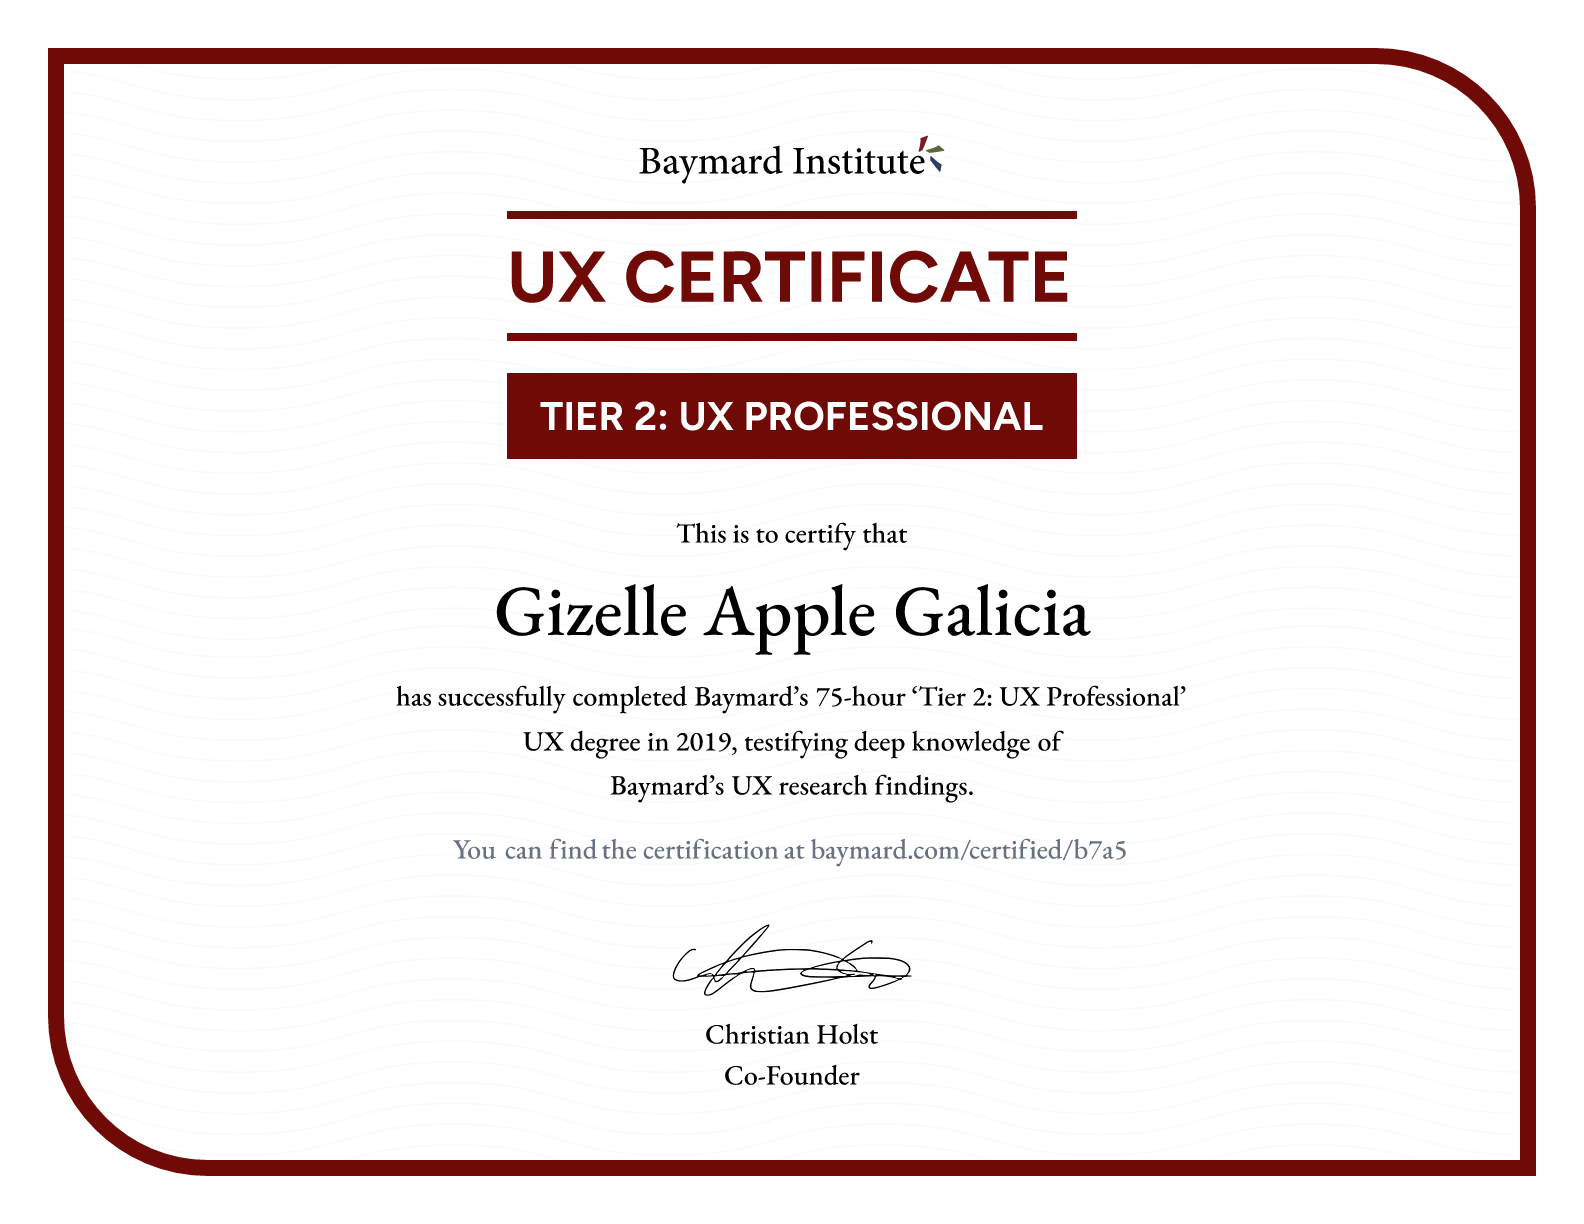 Gizelle Apple Galicia’s certificate